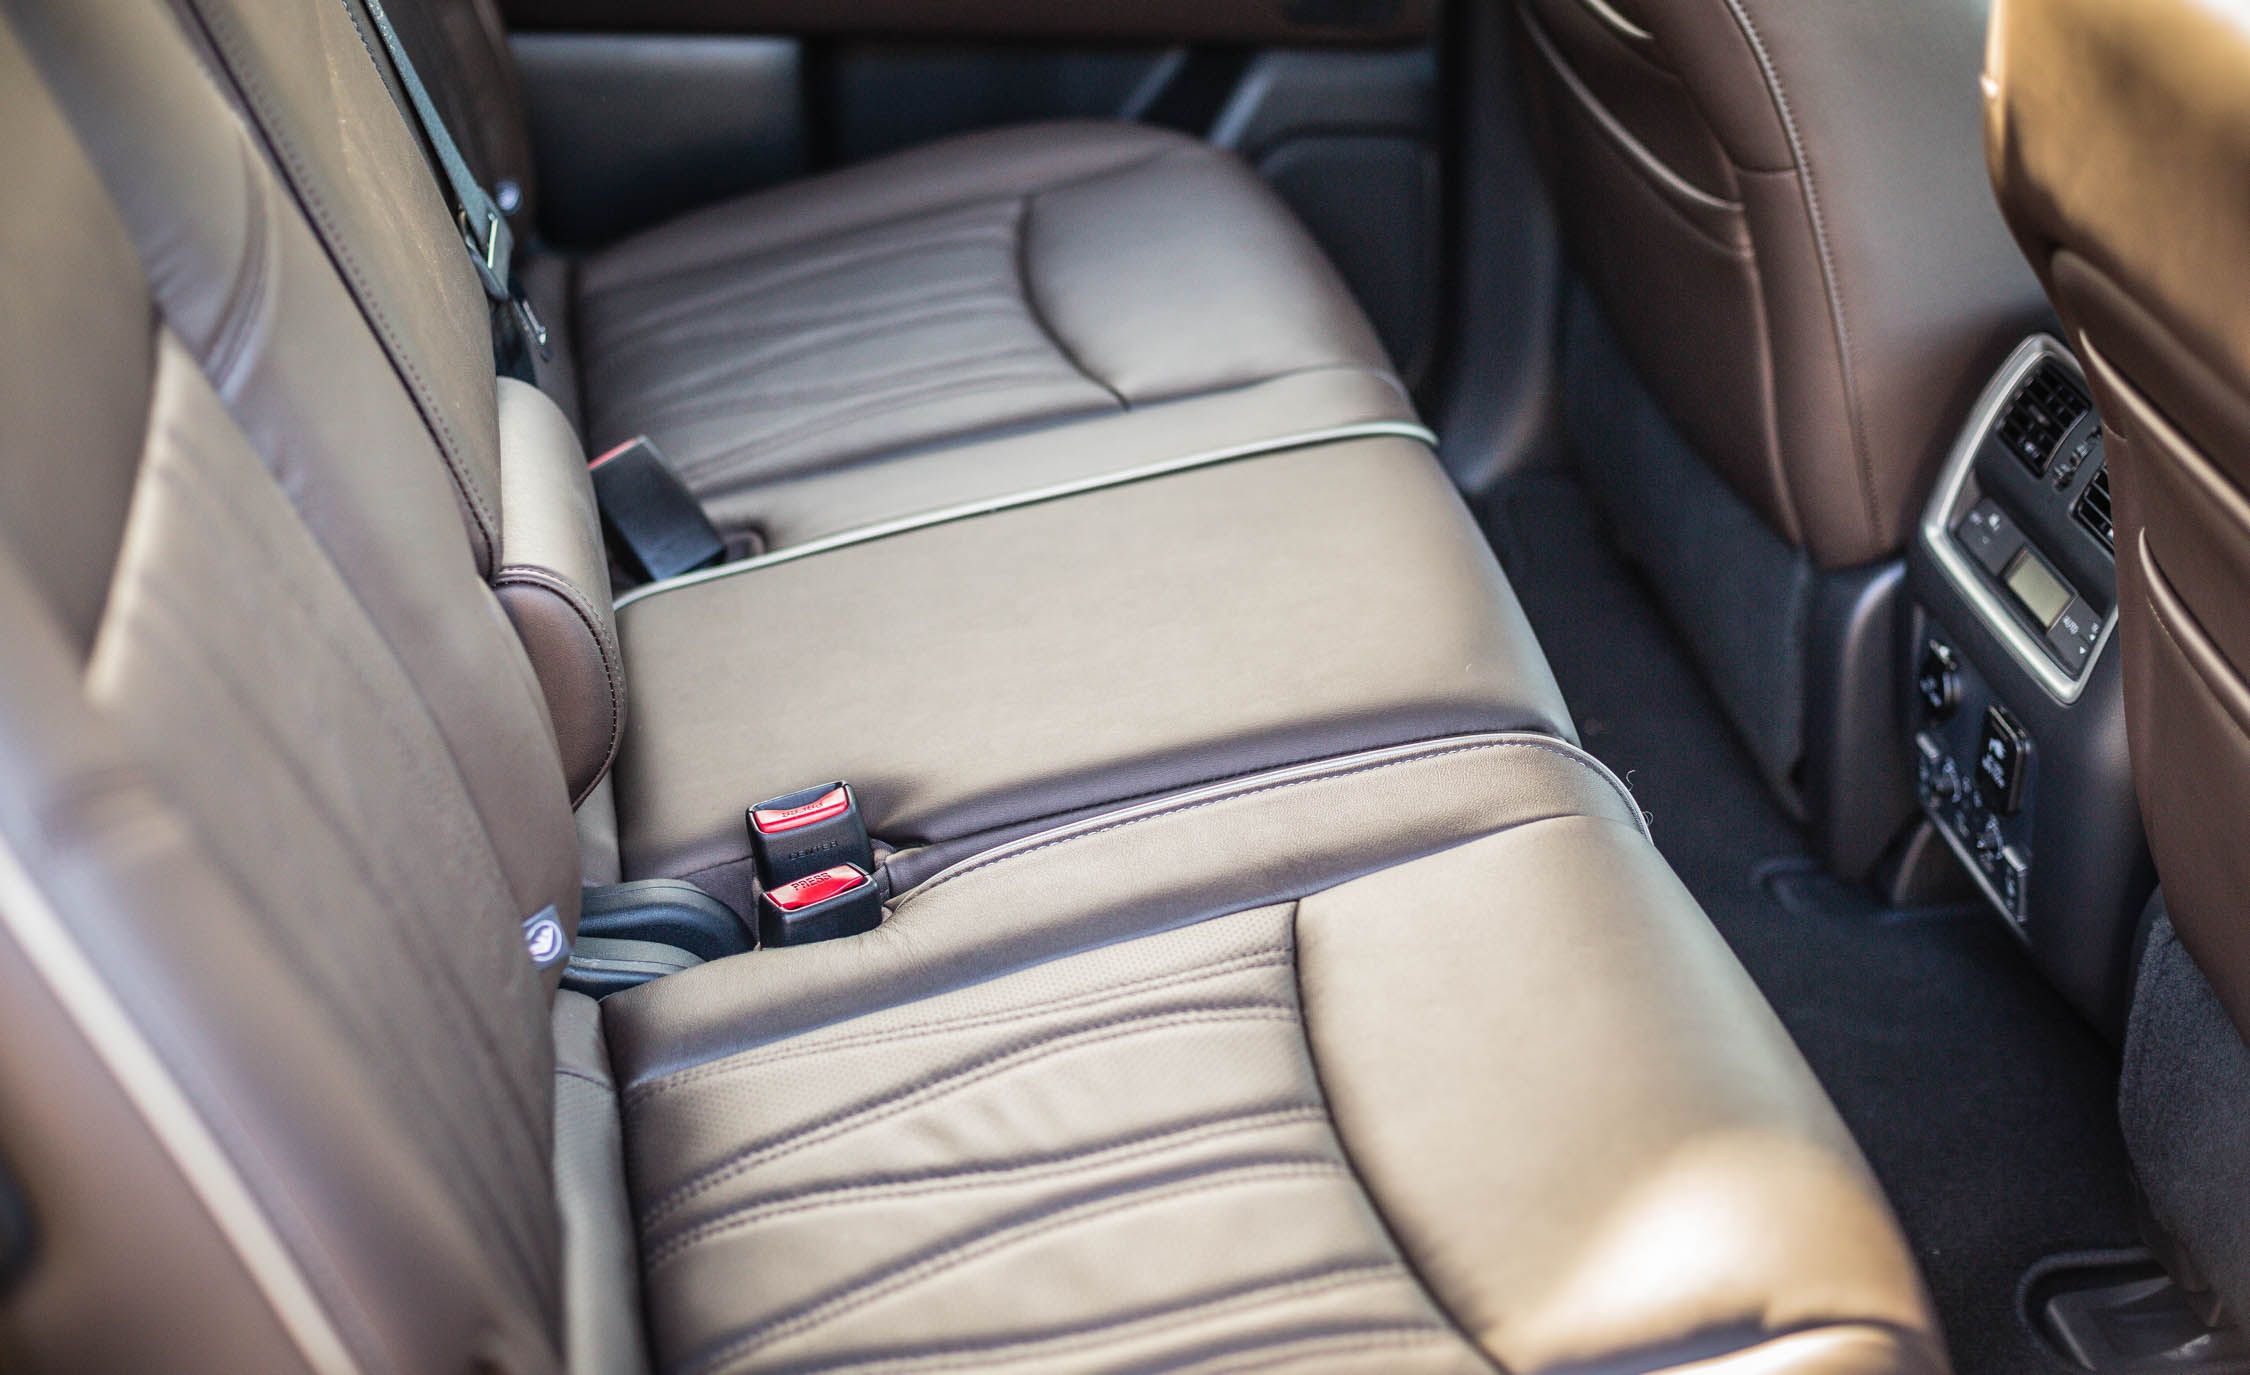 2017 Infiniti Qx60 White Interior Seats Rear (View 2 of 12)